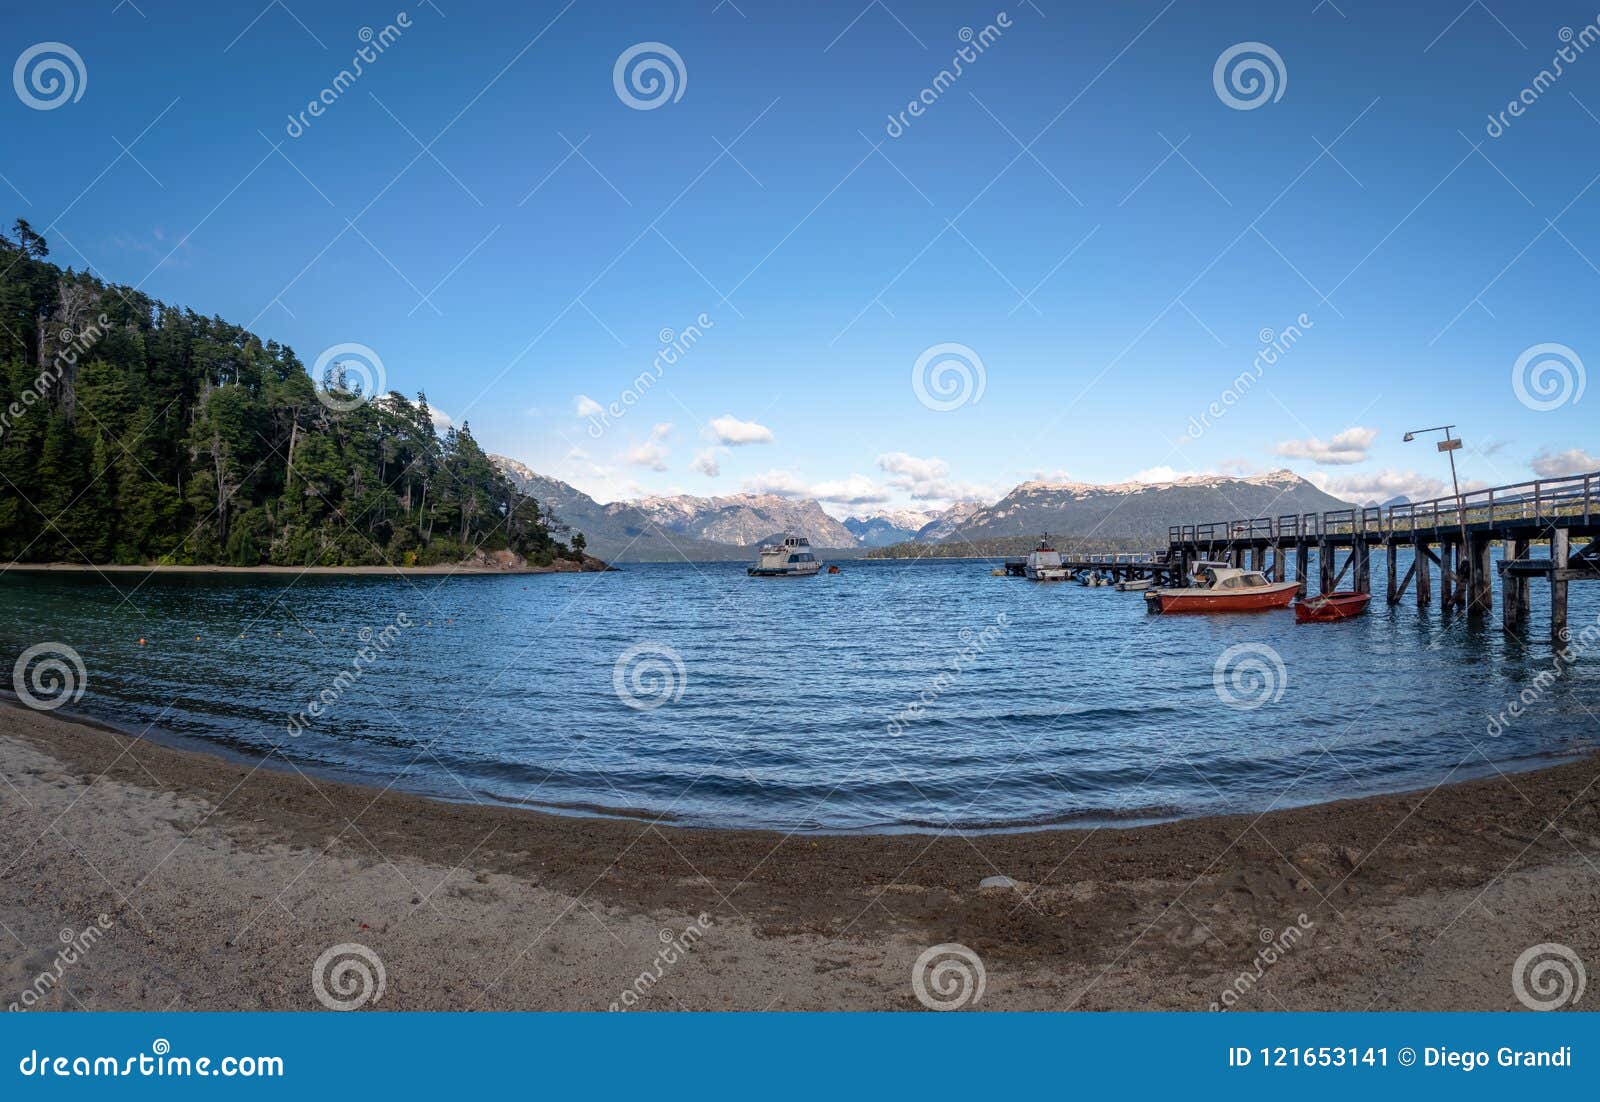 pier dock in bahia mansa bay at nahuel huapi lake - villa la angostura, patagonia, argentina